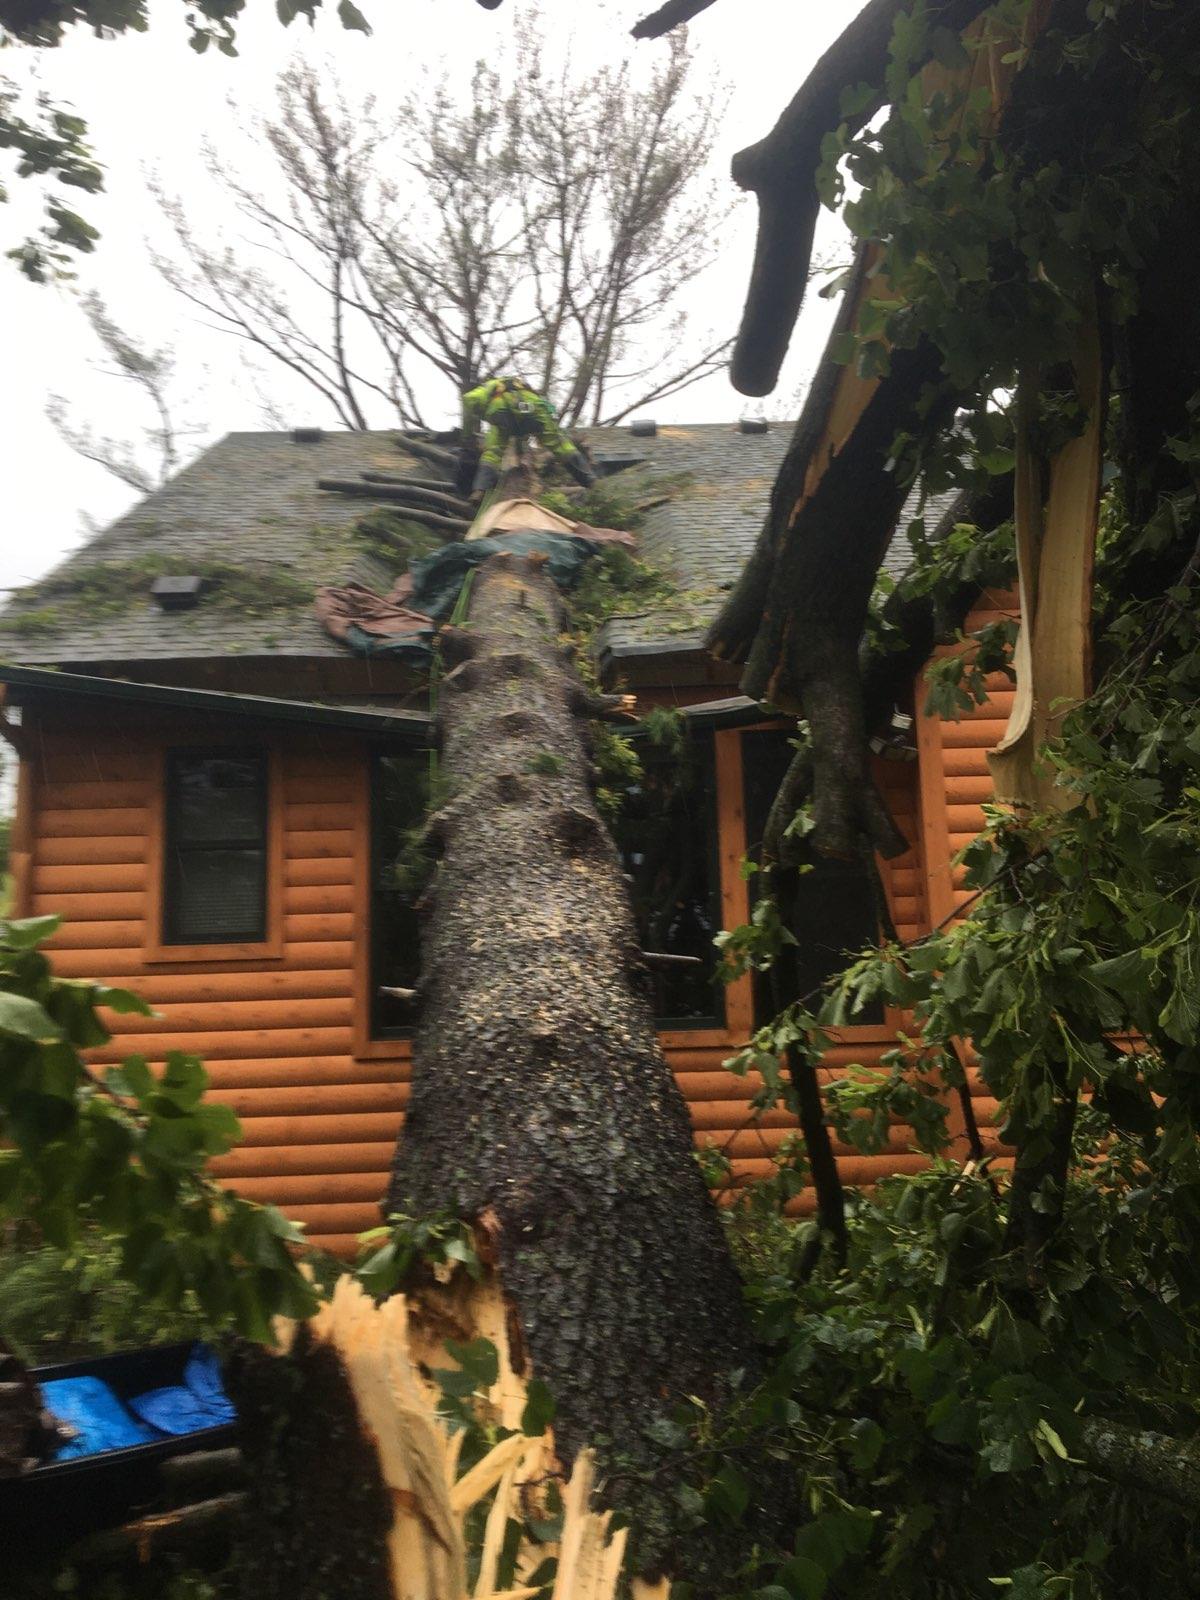 Storm Damage - Tree fell on house